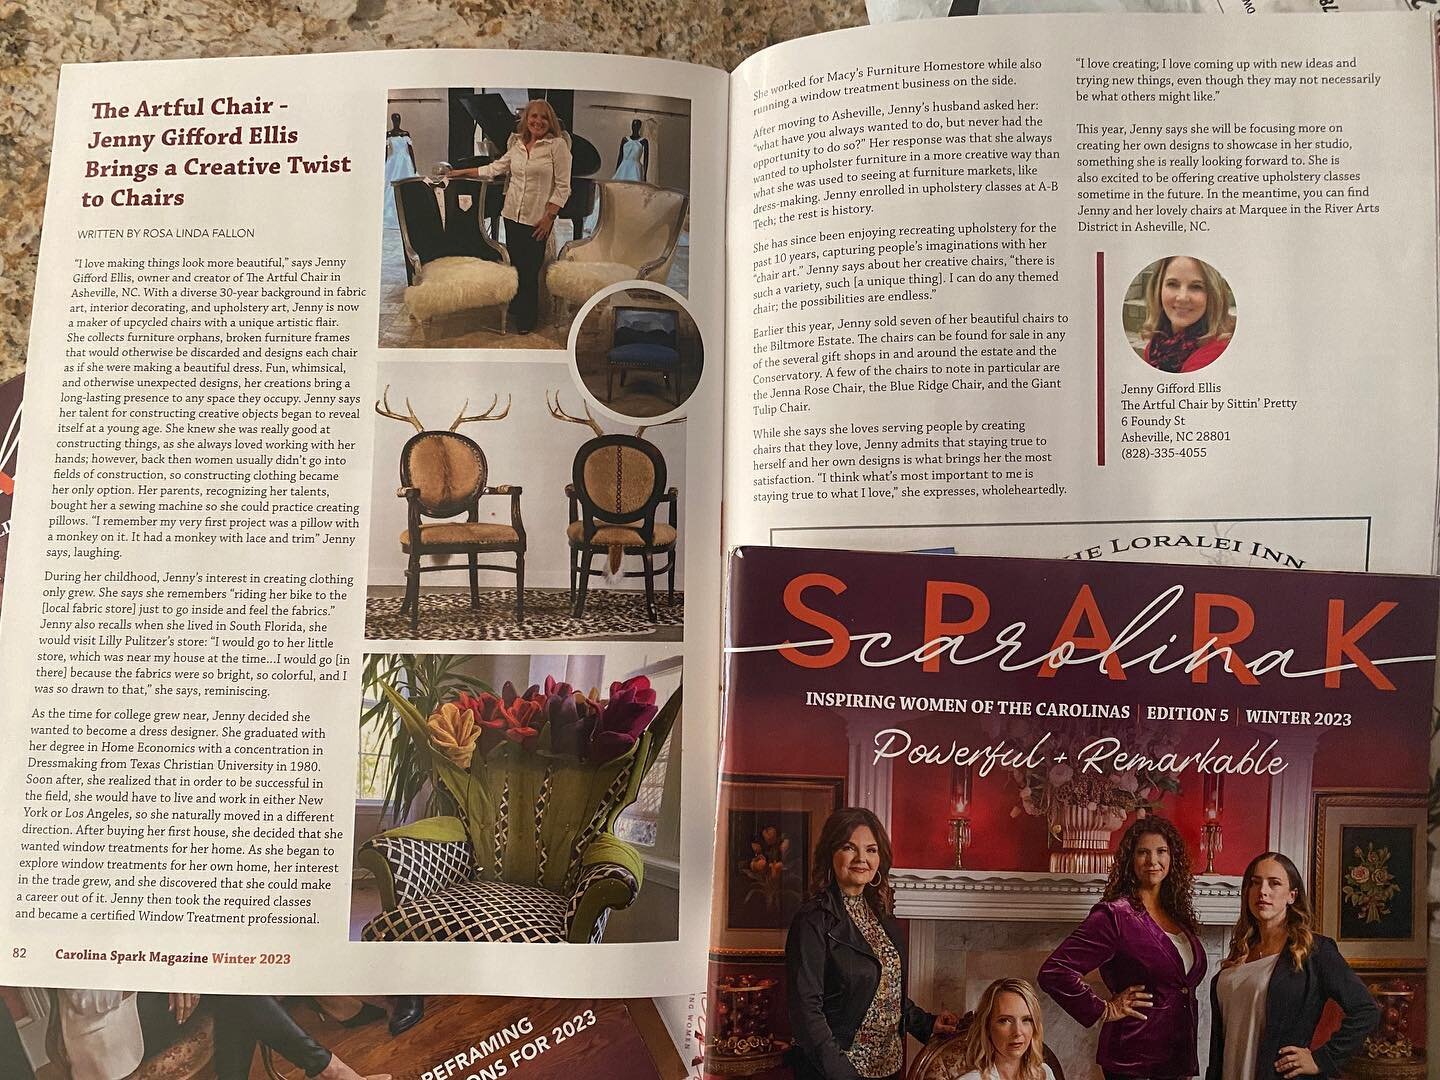 See my story In Carolina Spark Magazine!  Inspiring women in the Carolinas.  Pick your copy up today.  #carolinasparkmagazine , #marqueeasheville, #riverartsasheville #chairart